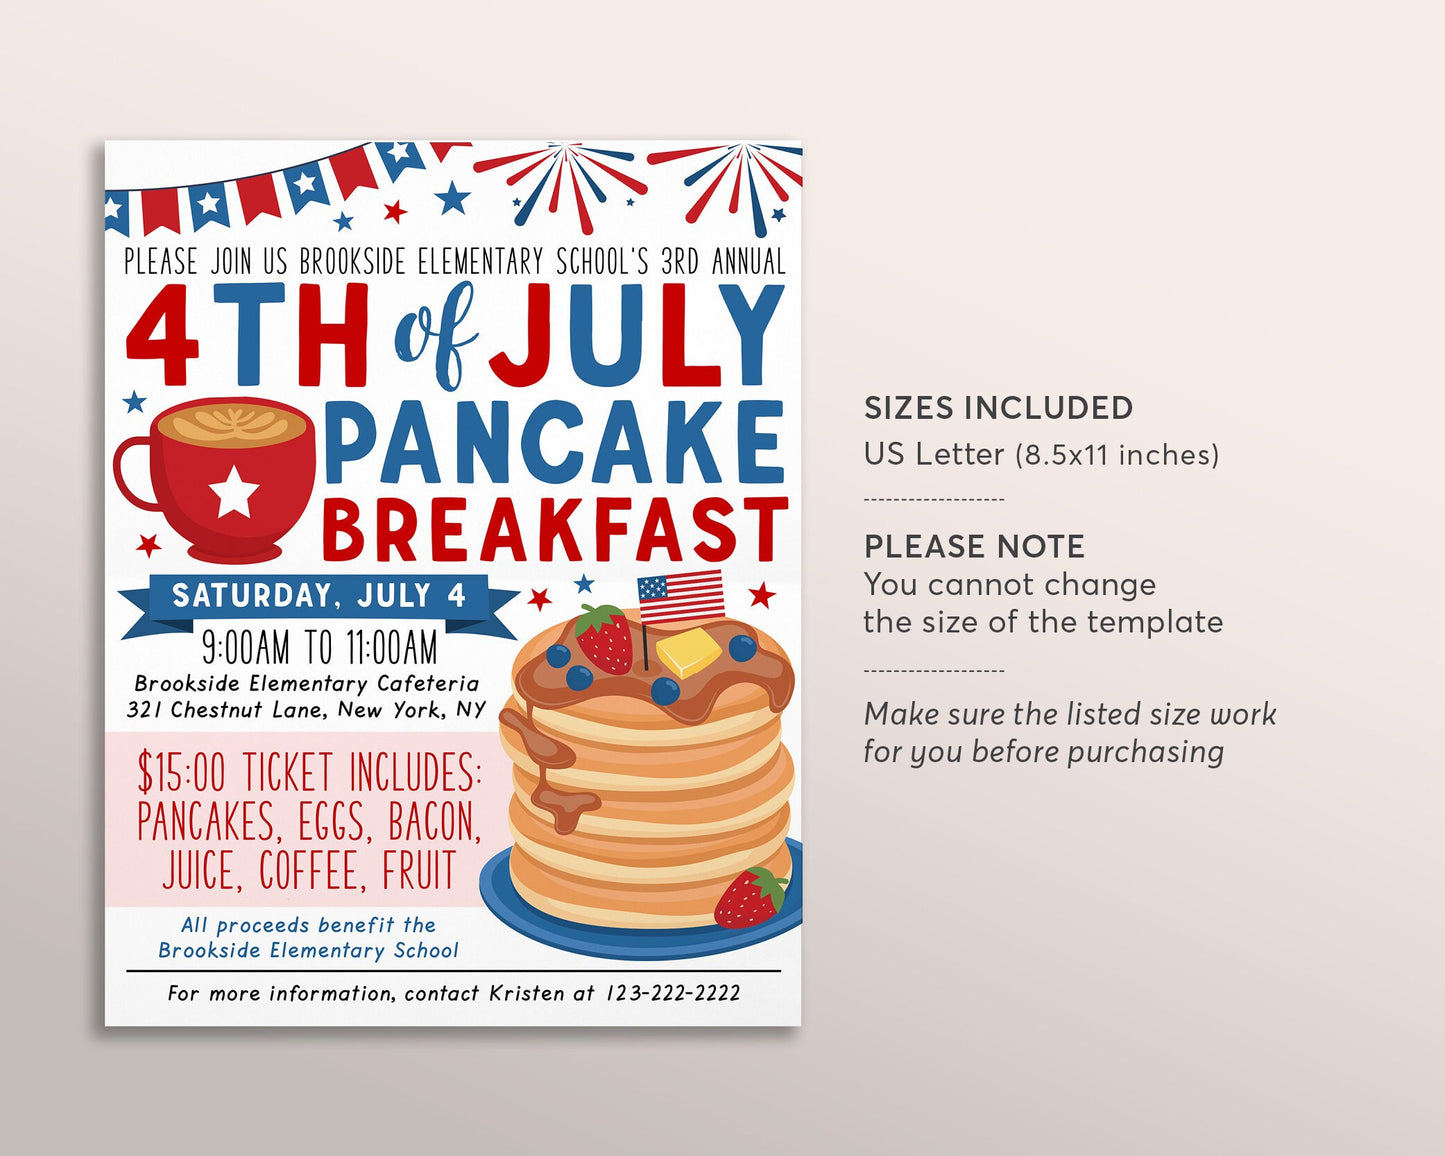 4th of July Pancake Breakfast Flyer Editable Template, Summer Pancakes Brunch Fundraiser Event, School PTO PTA Church Charity Community